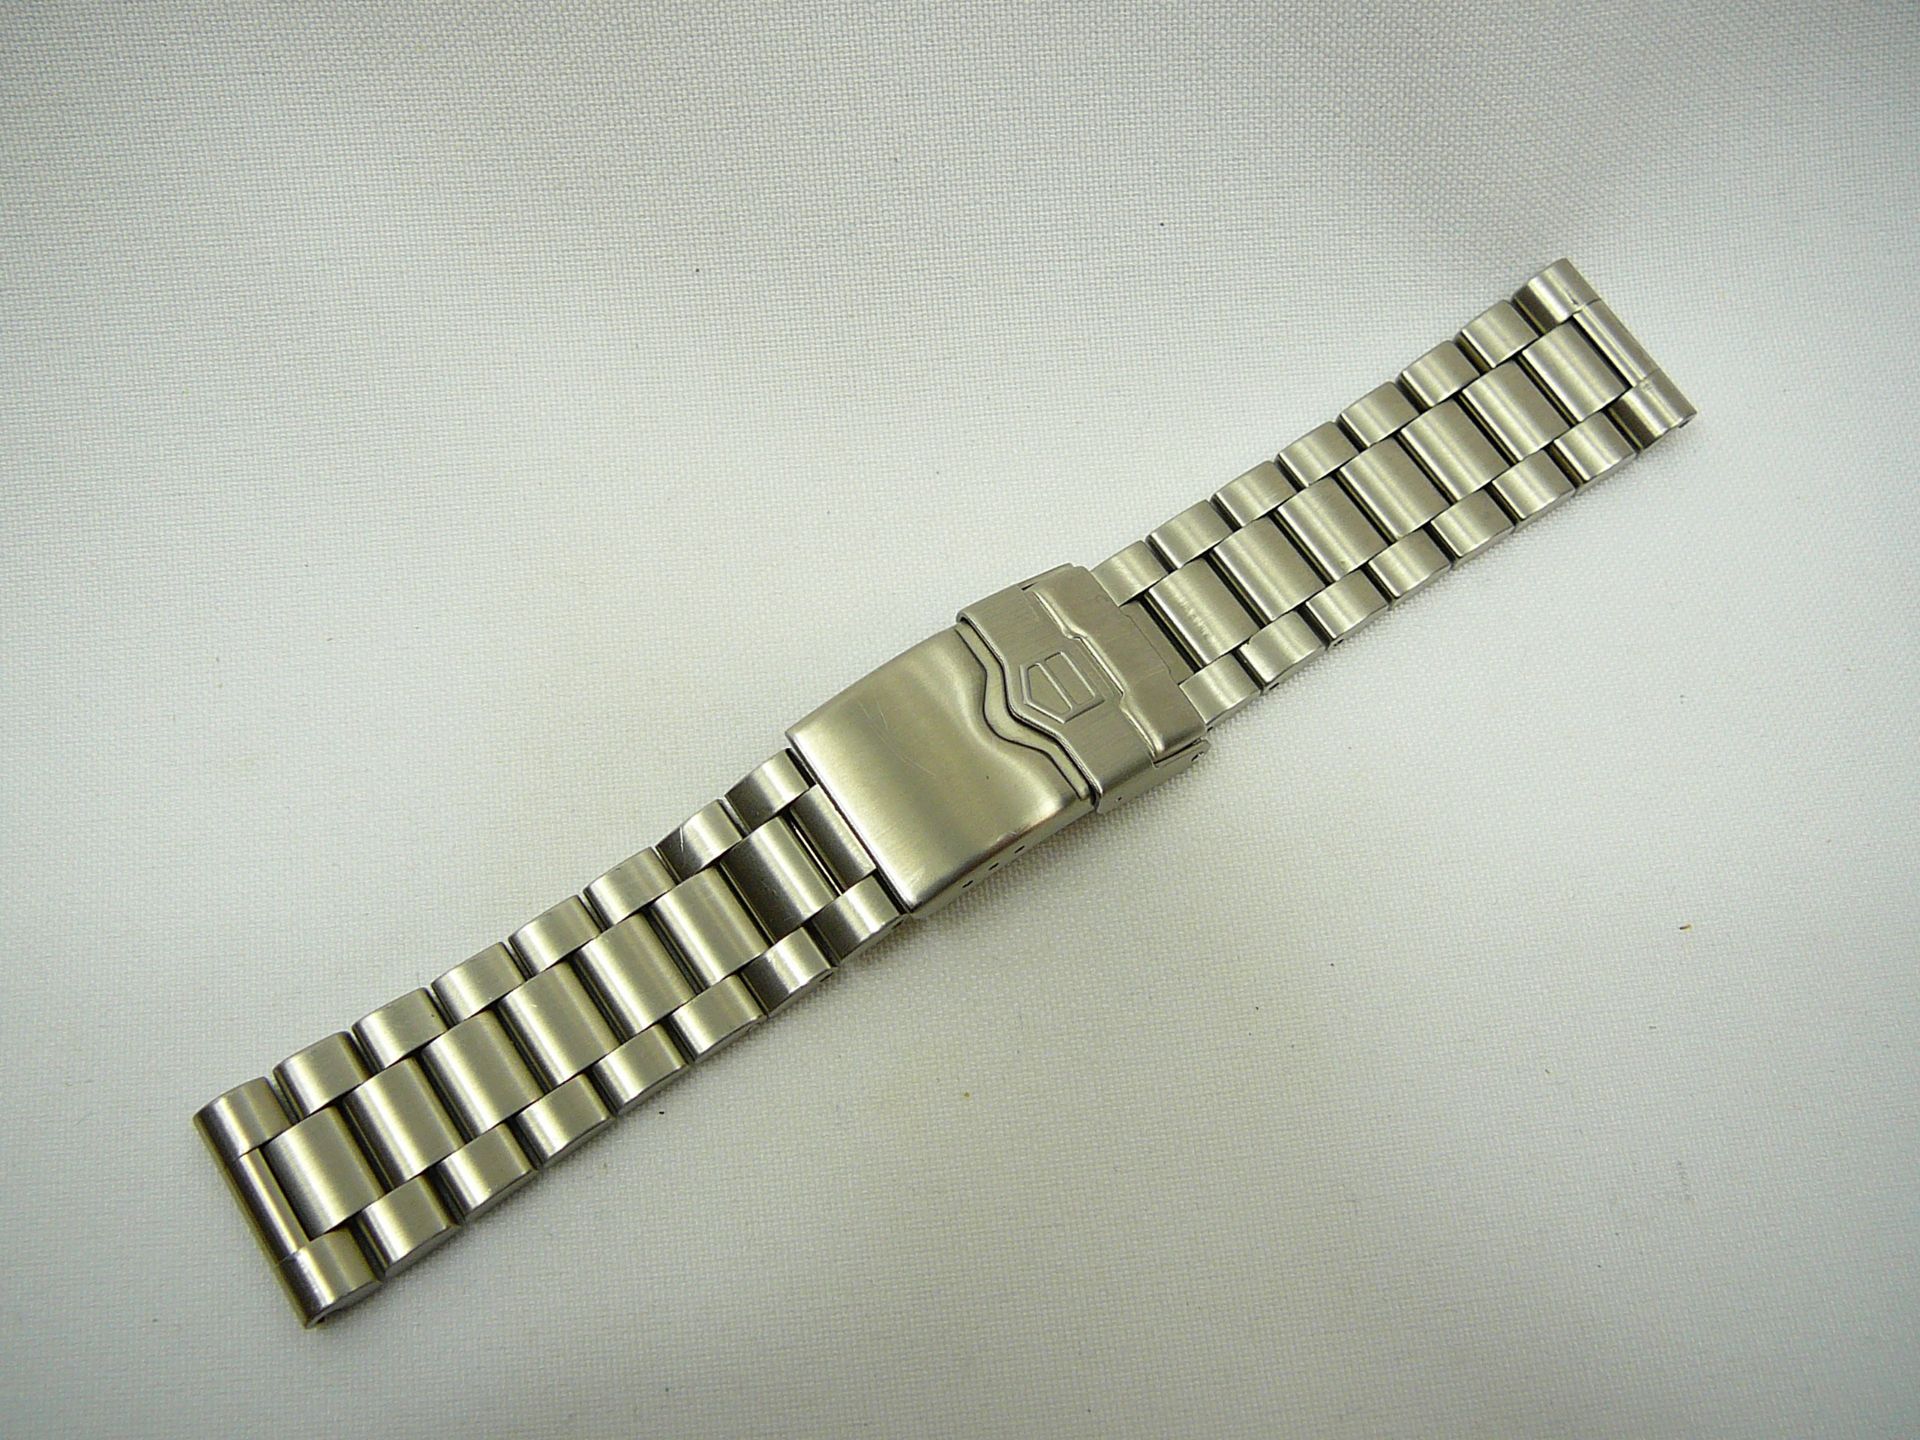 Gents Tag Heuer 19mm watch bracelet.